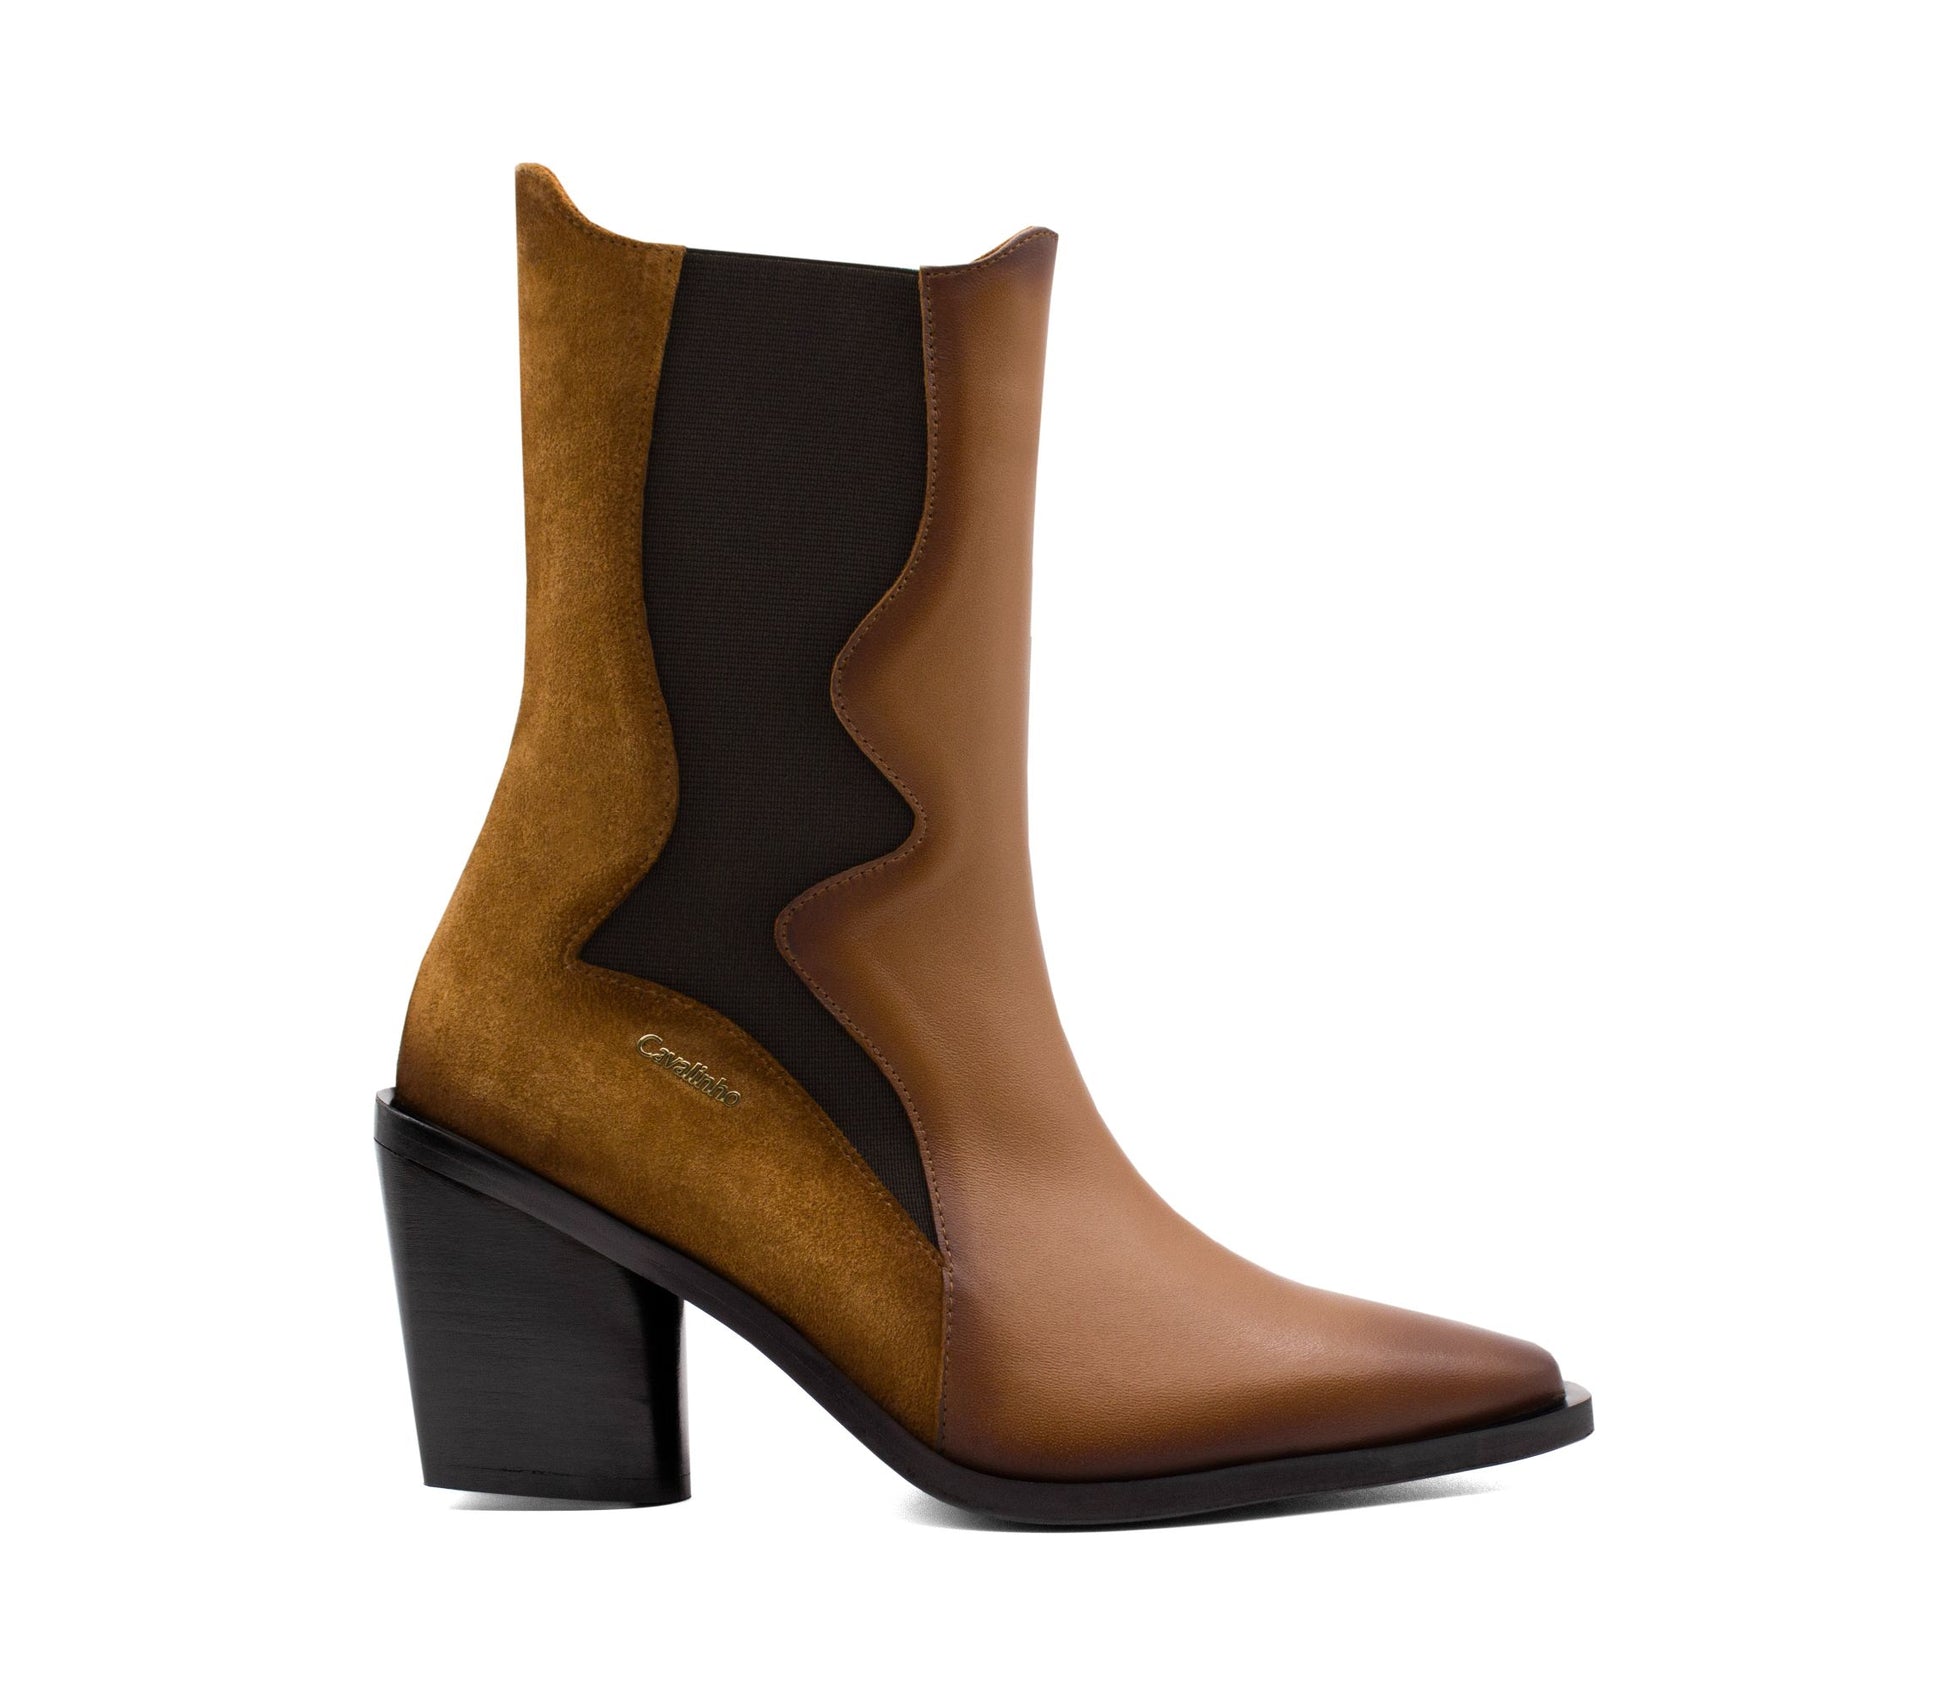 #color_ SaddleBrown | Cavalinho Arizona Leather Boots - SaddleBrown - 48160401.13_1